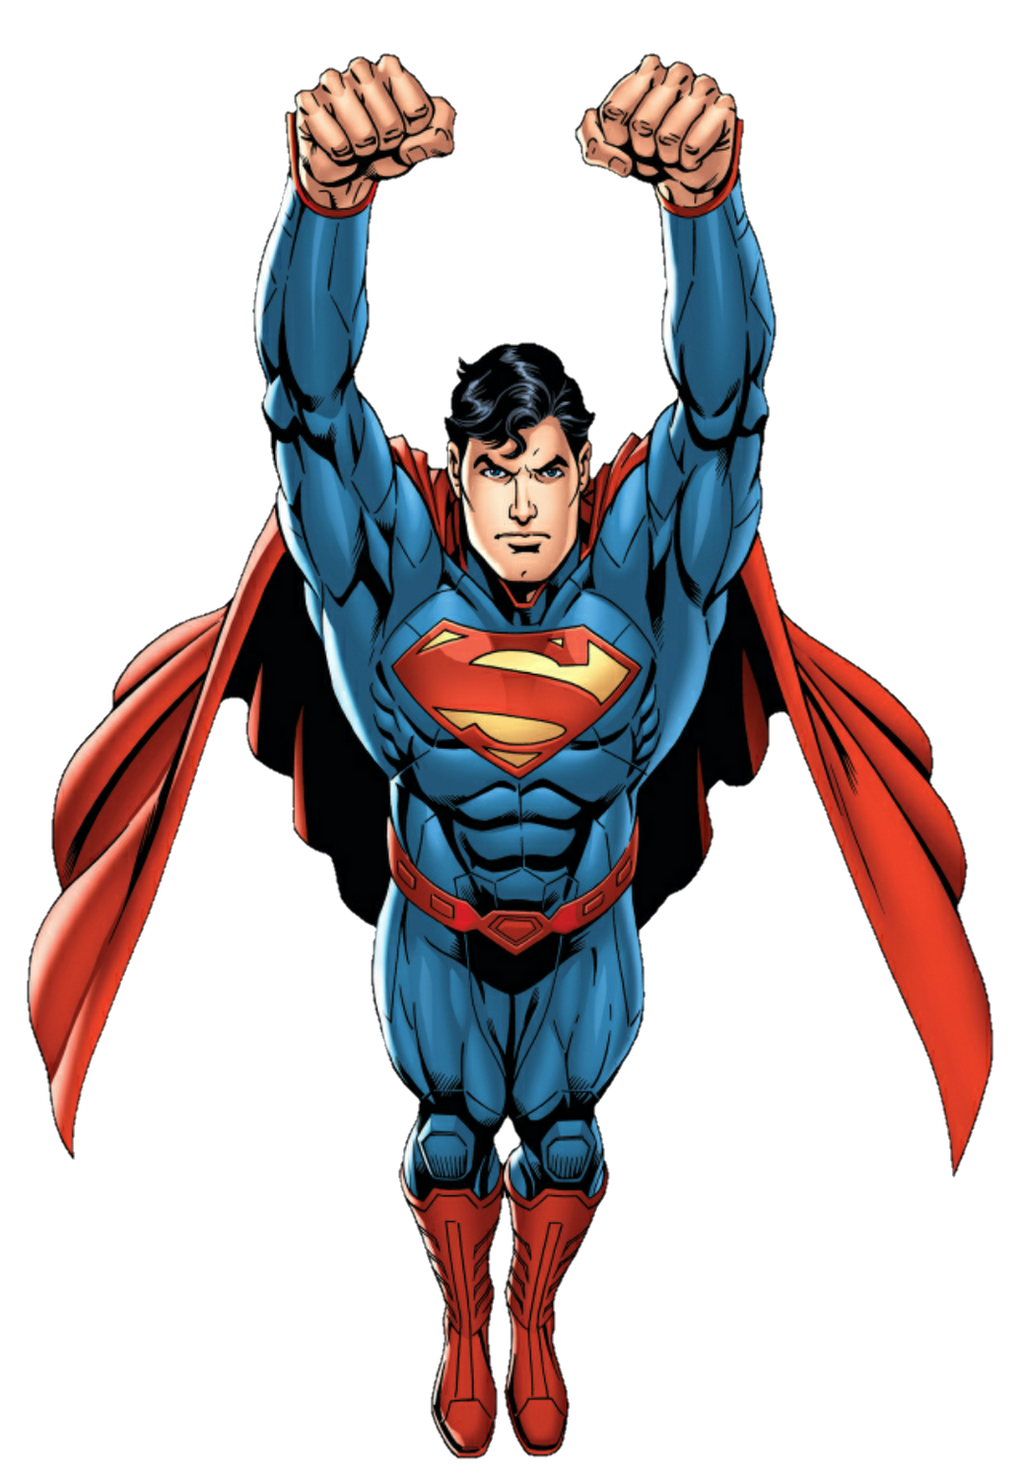 new_52_superman_by_mayantimegod-d9mdzz3.